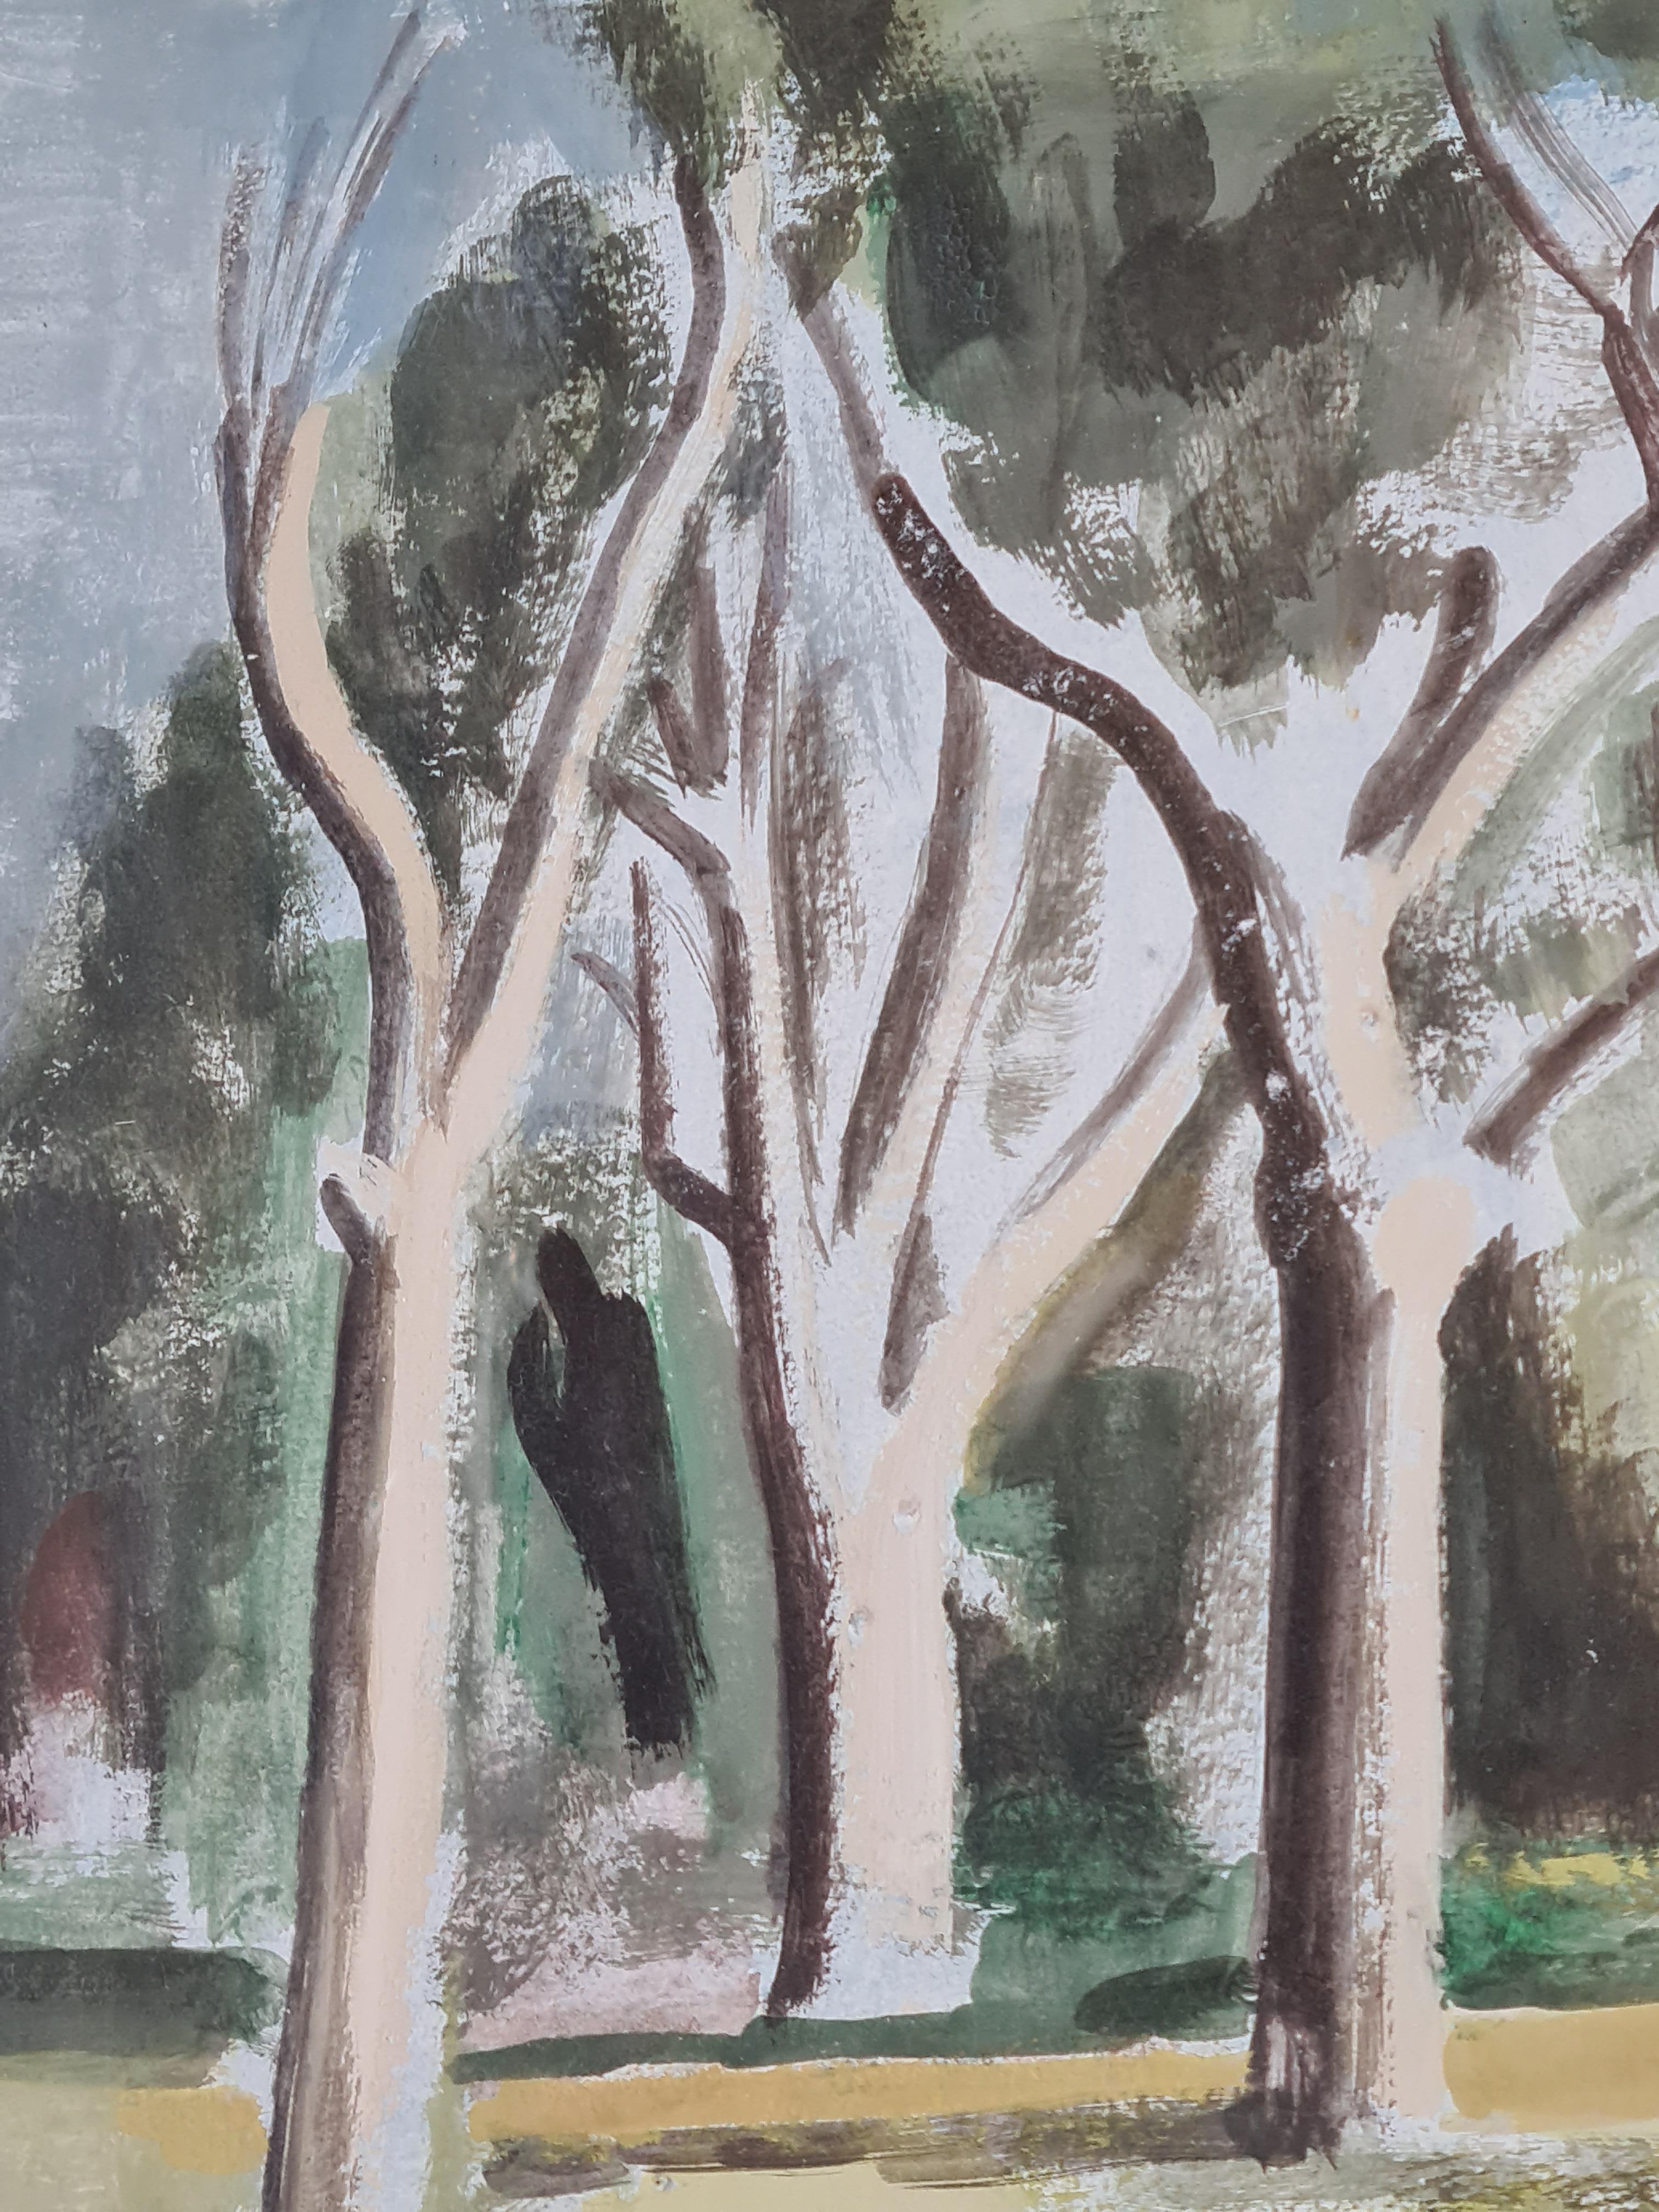 Cookham Dean, A Post Impressionist Landscape, Homage to Cezanne - Post-Impressionist Art by Bernard Meninsky